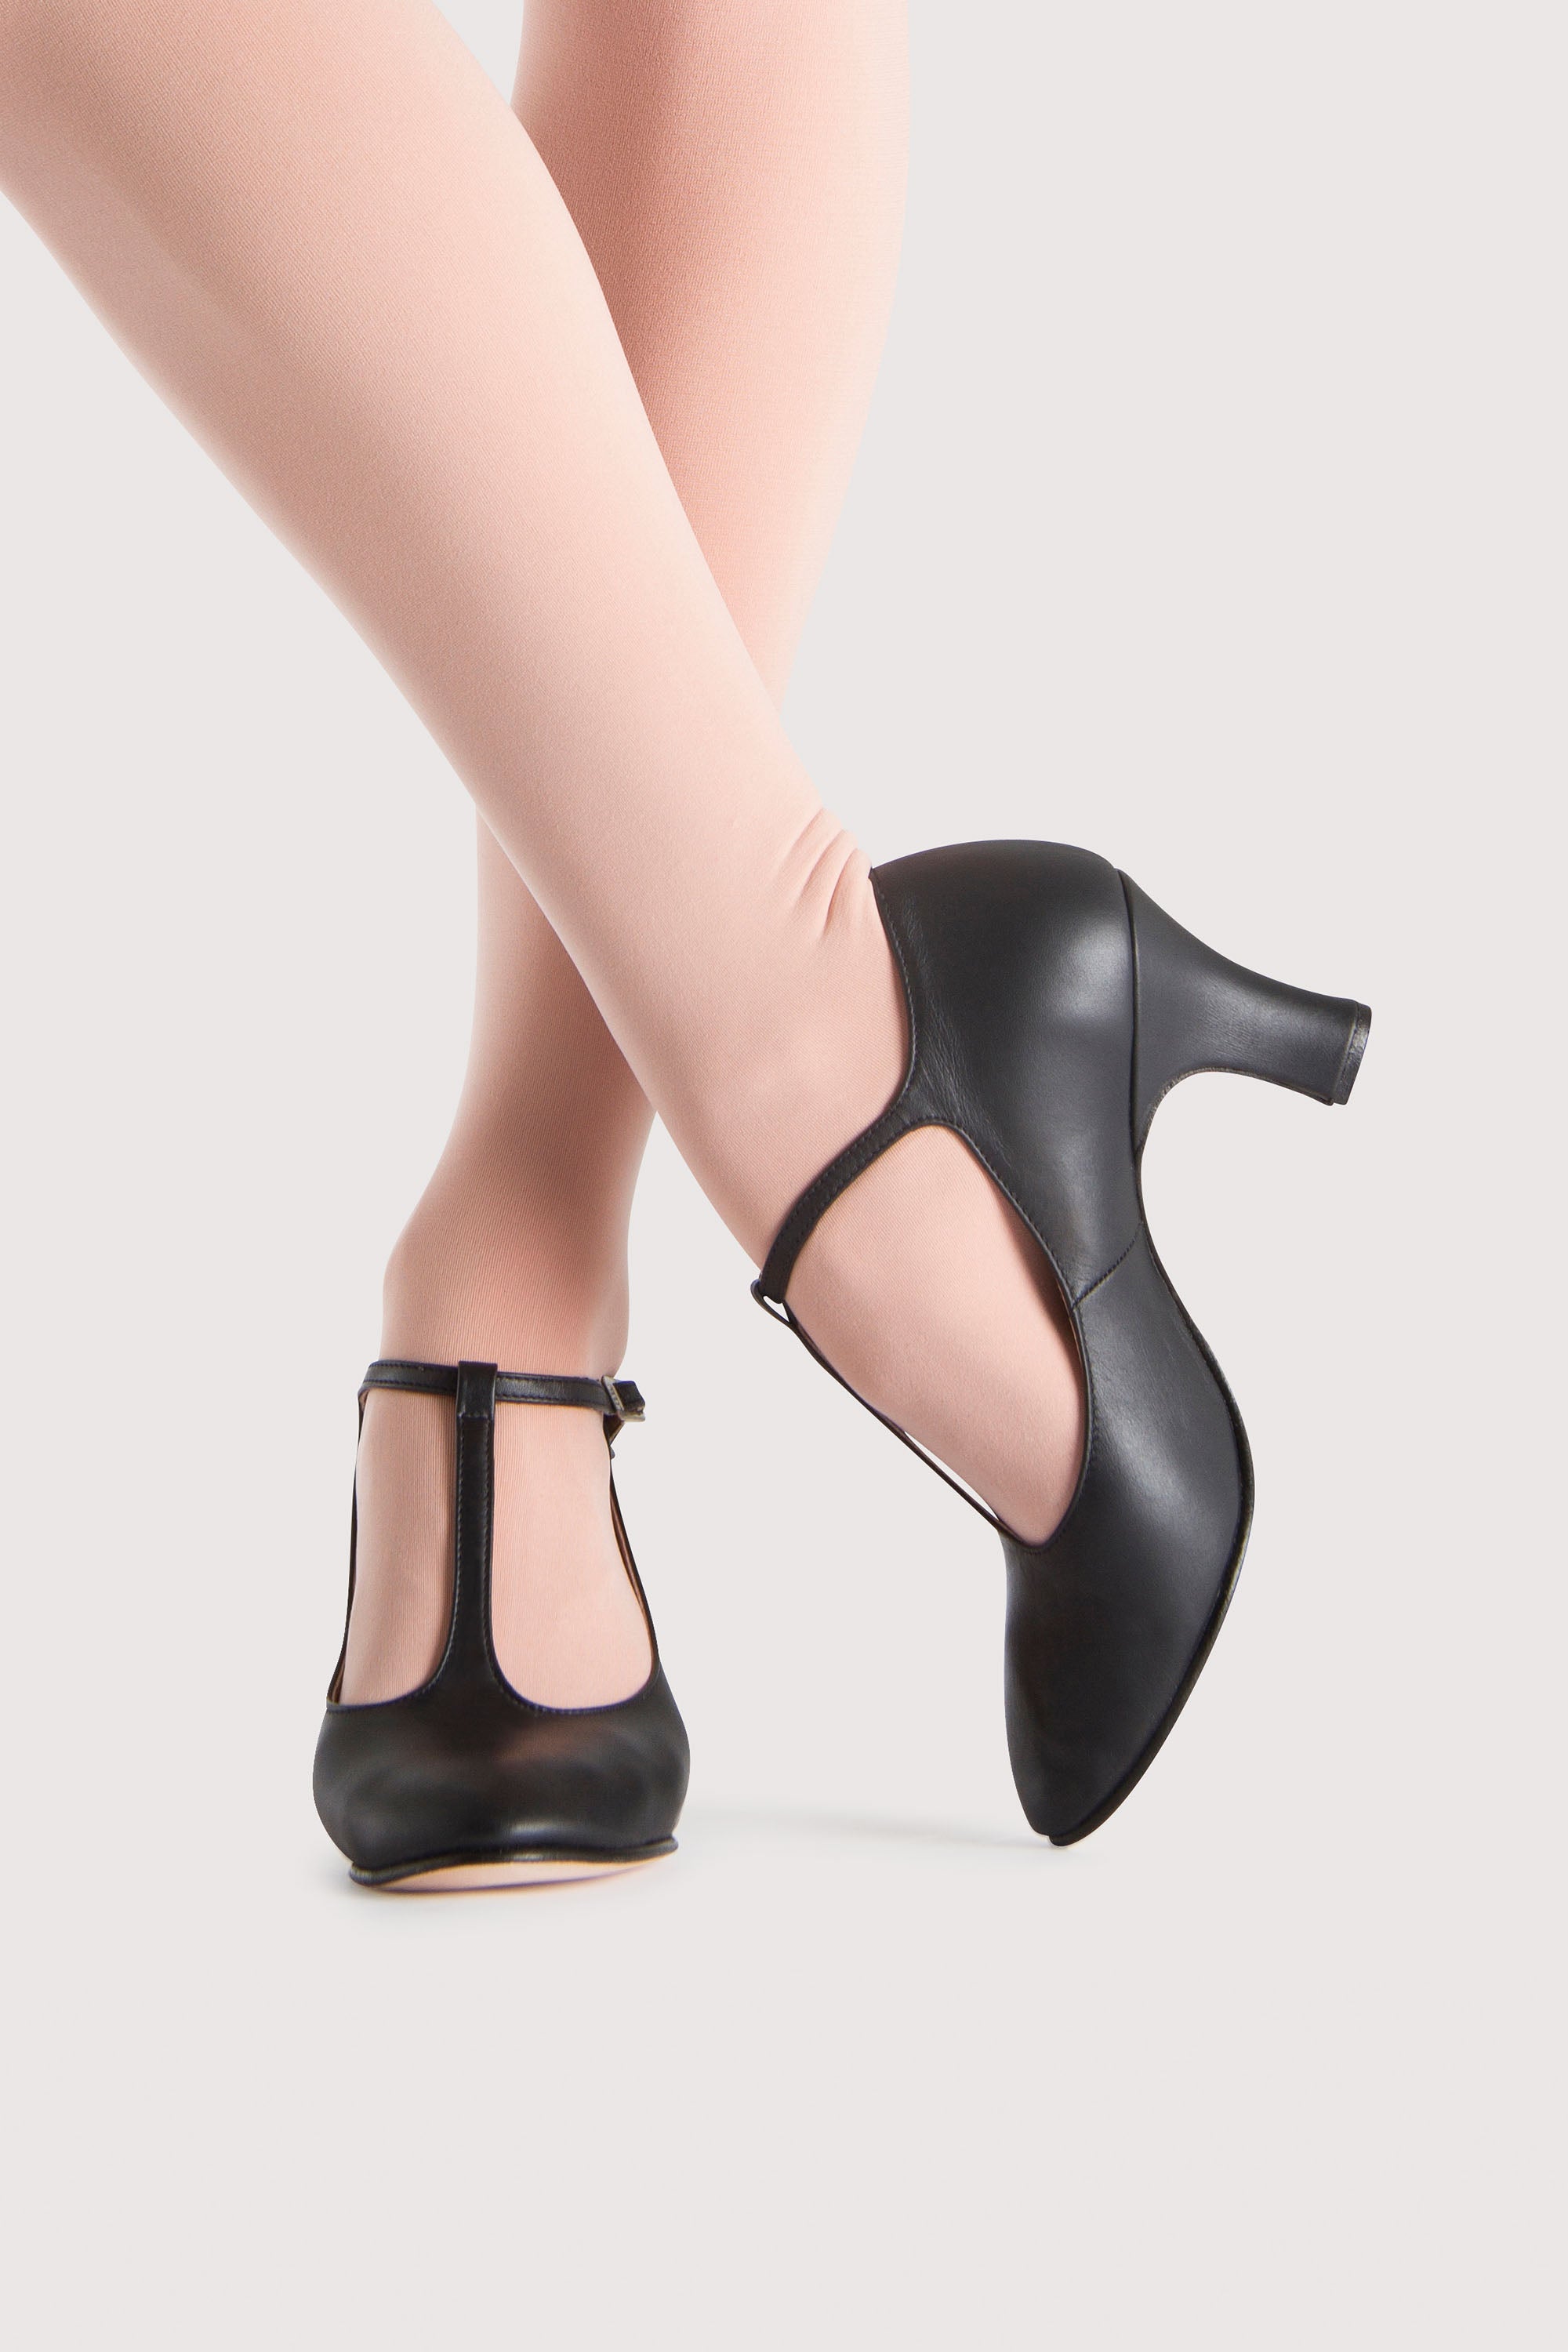 Alemana - Satin Open Toe Lace Up Dance Shoe - 3 inch Flared Heels - Burju  Shoes